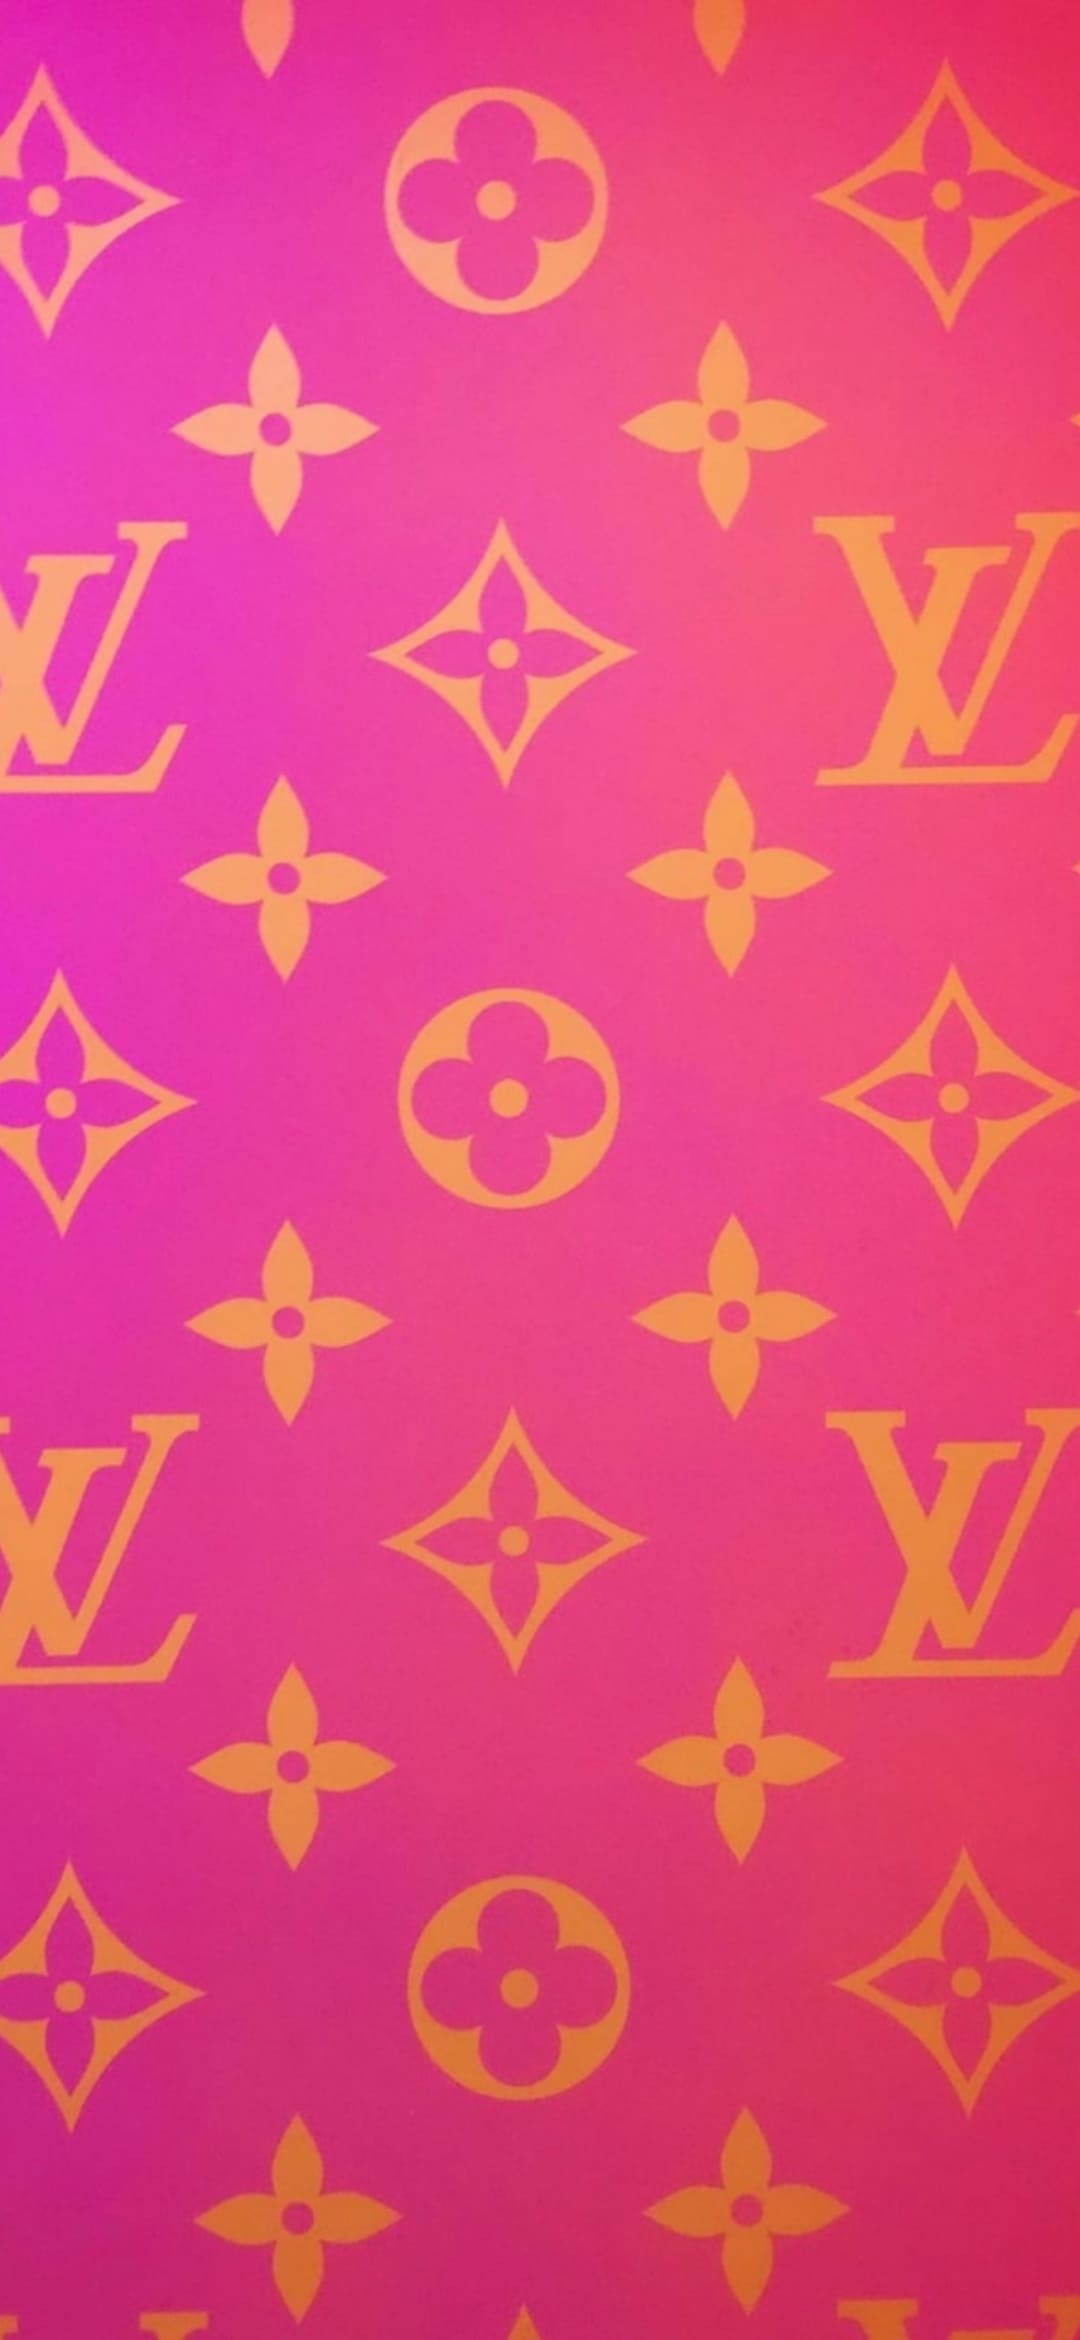 Cool Louis Vuitton Wallpapers